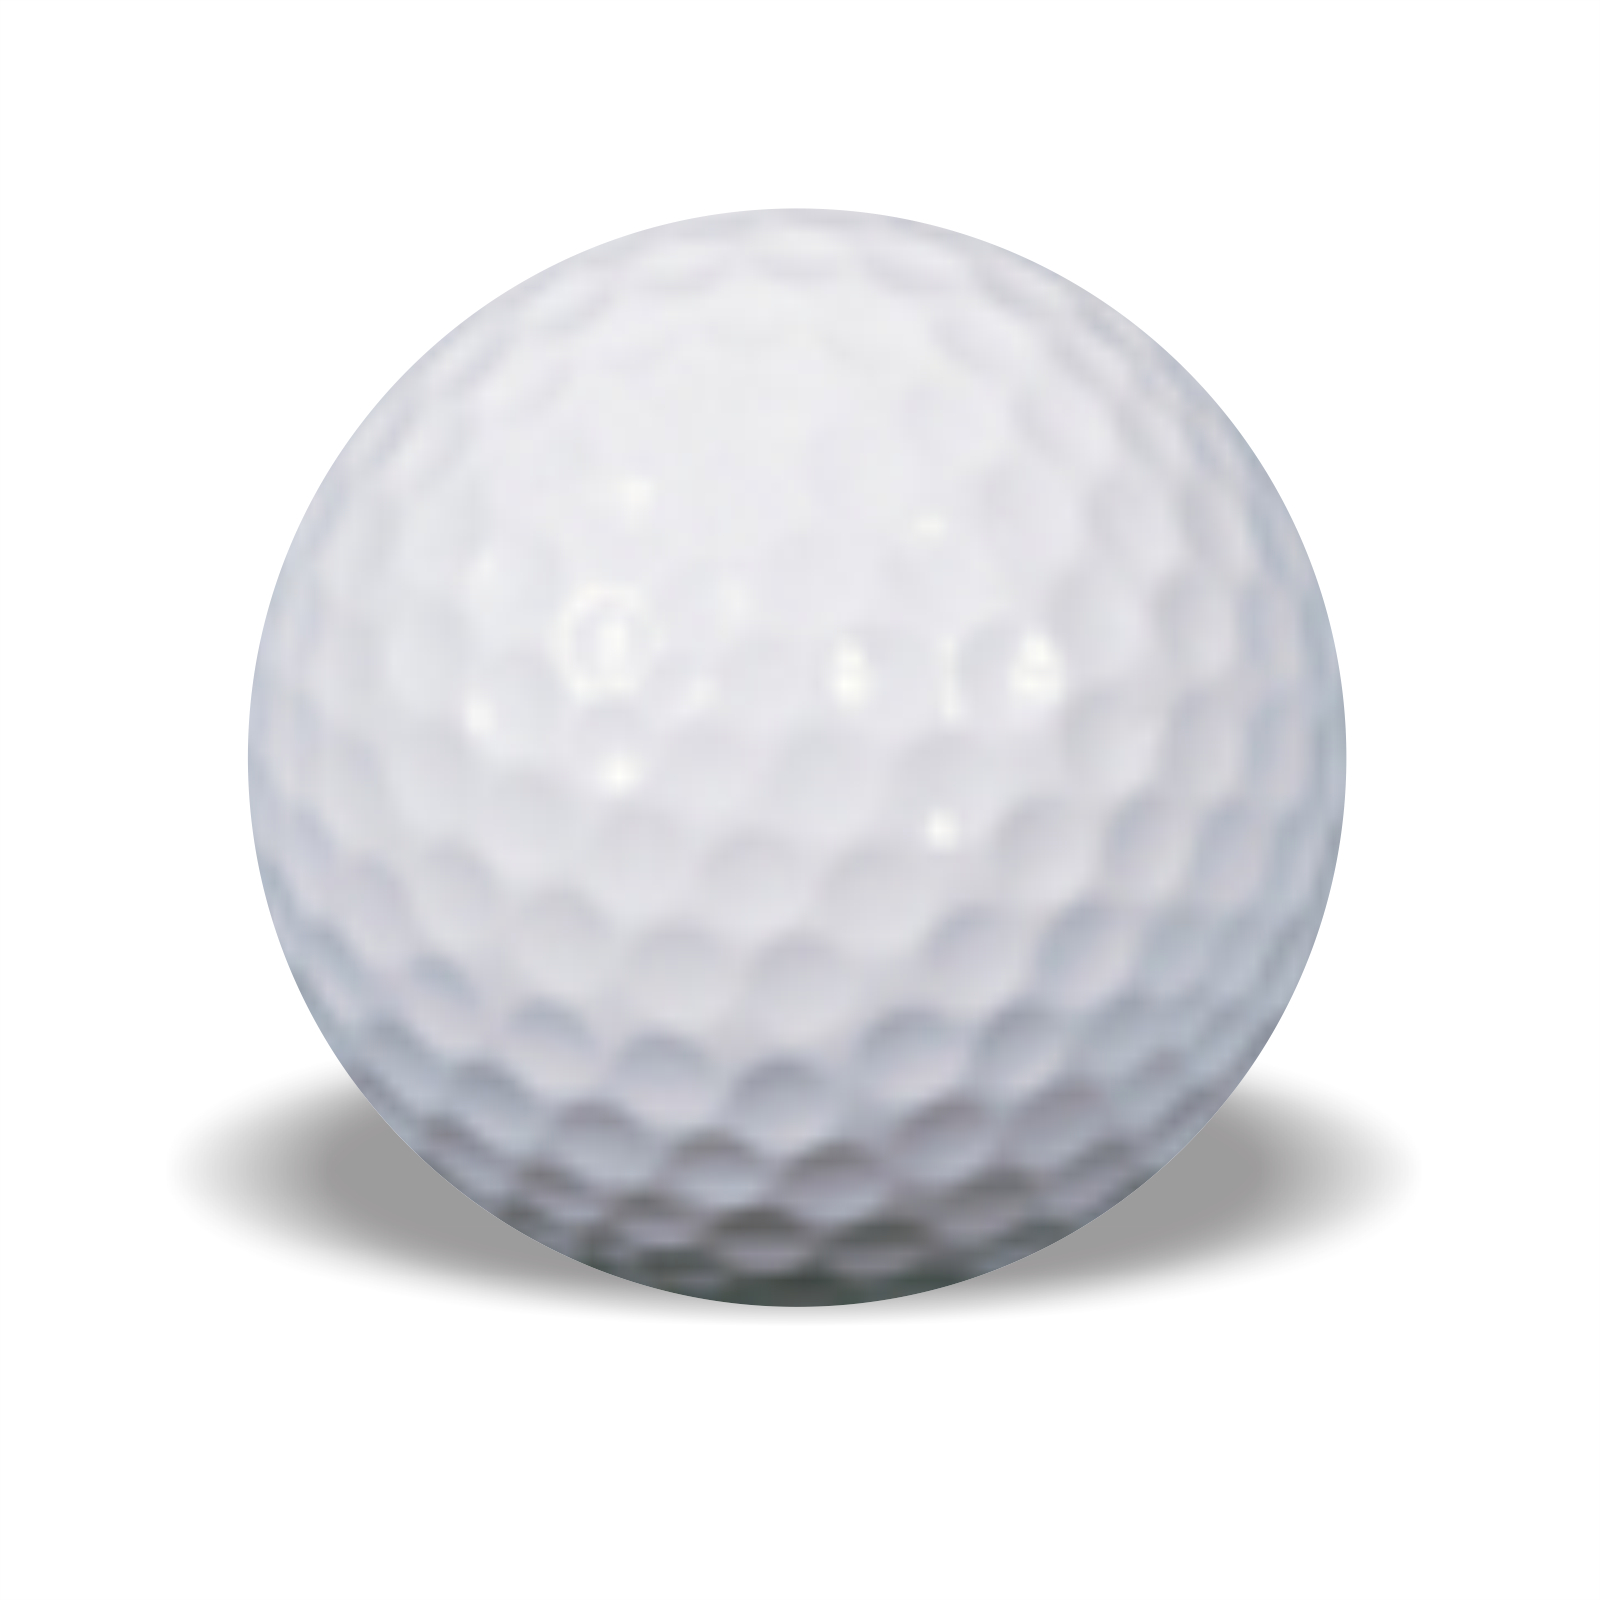 Top 91+ Wallpaper Picture Of A Golf Ball Sharp